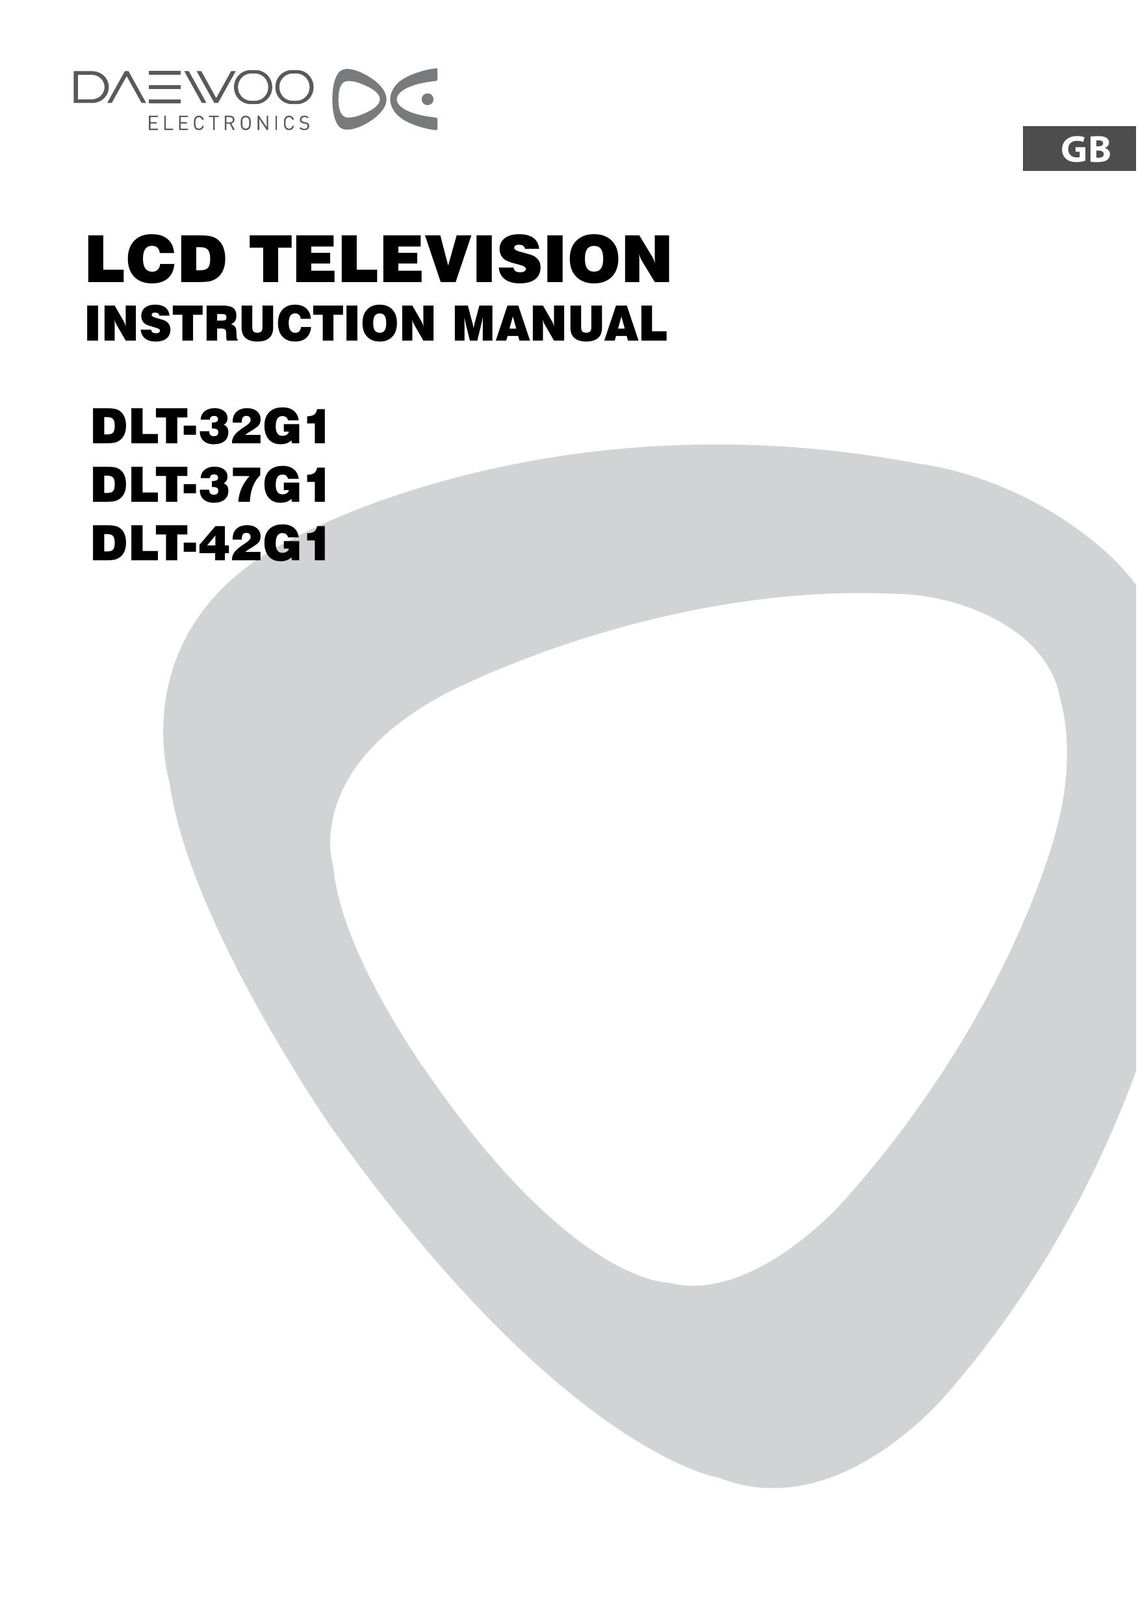 Daewoo DLT-37G1 Flat Panel Television User Manual